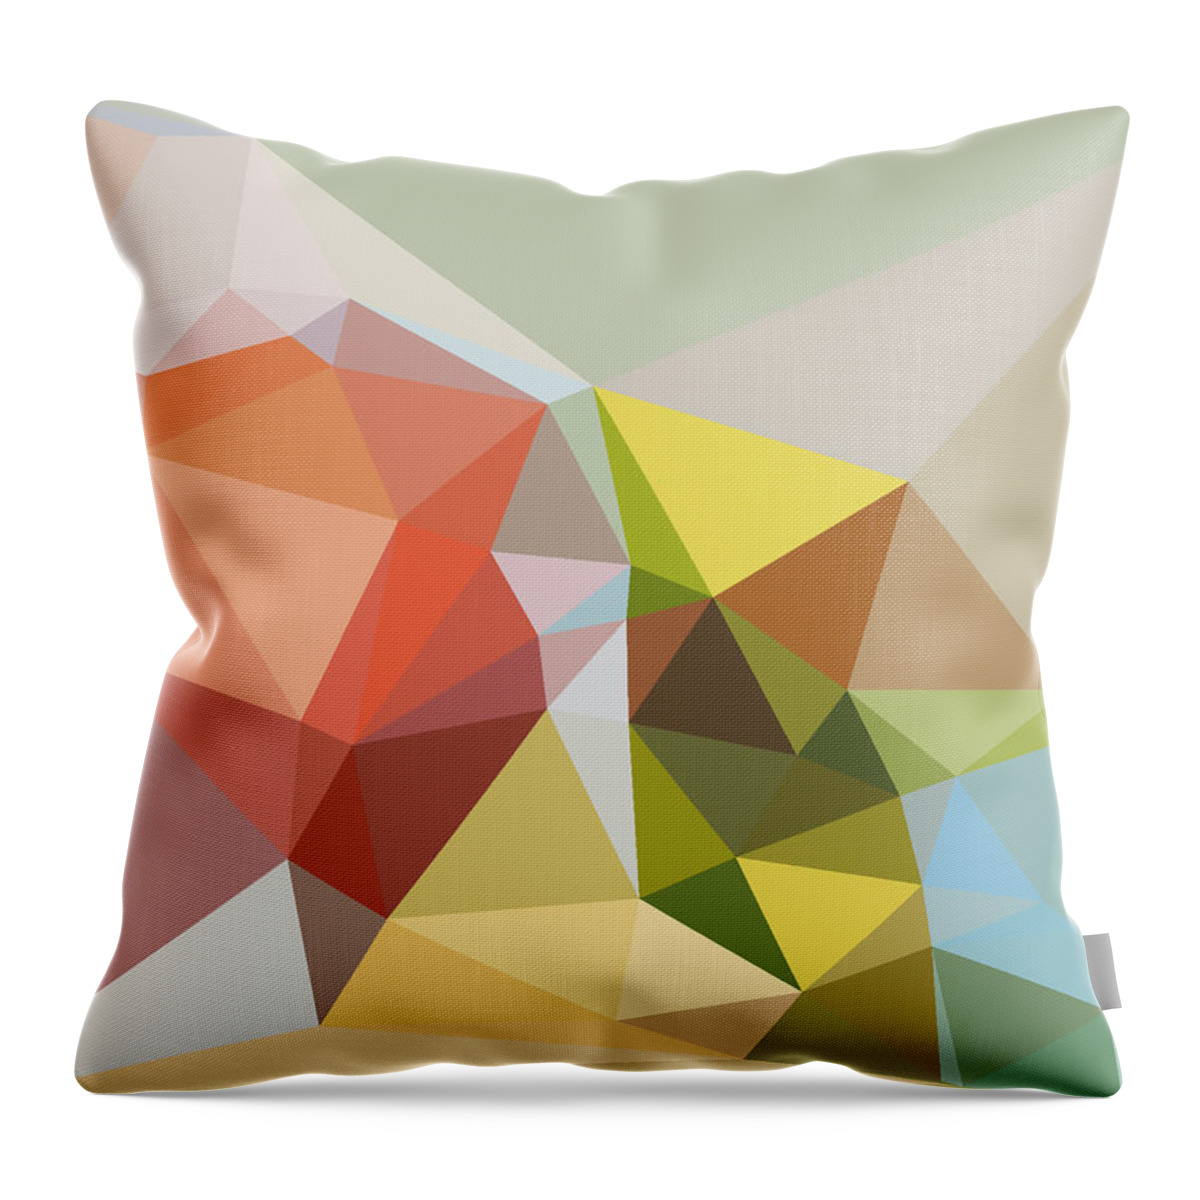 Orange Throw Pillow featuring the digital art Orange Fruit - Triangulation by Themayart